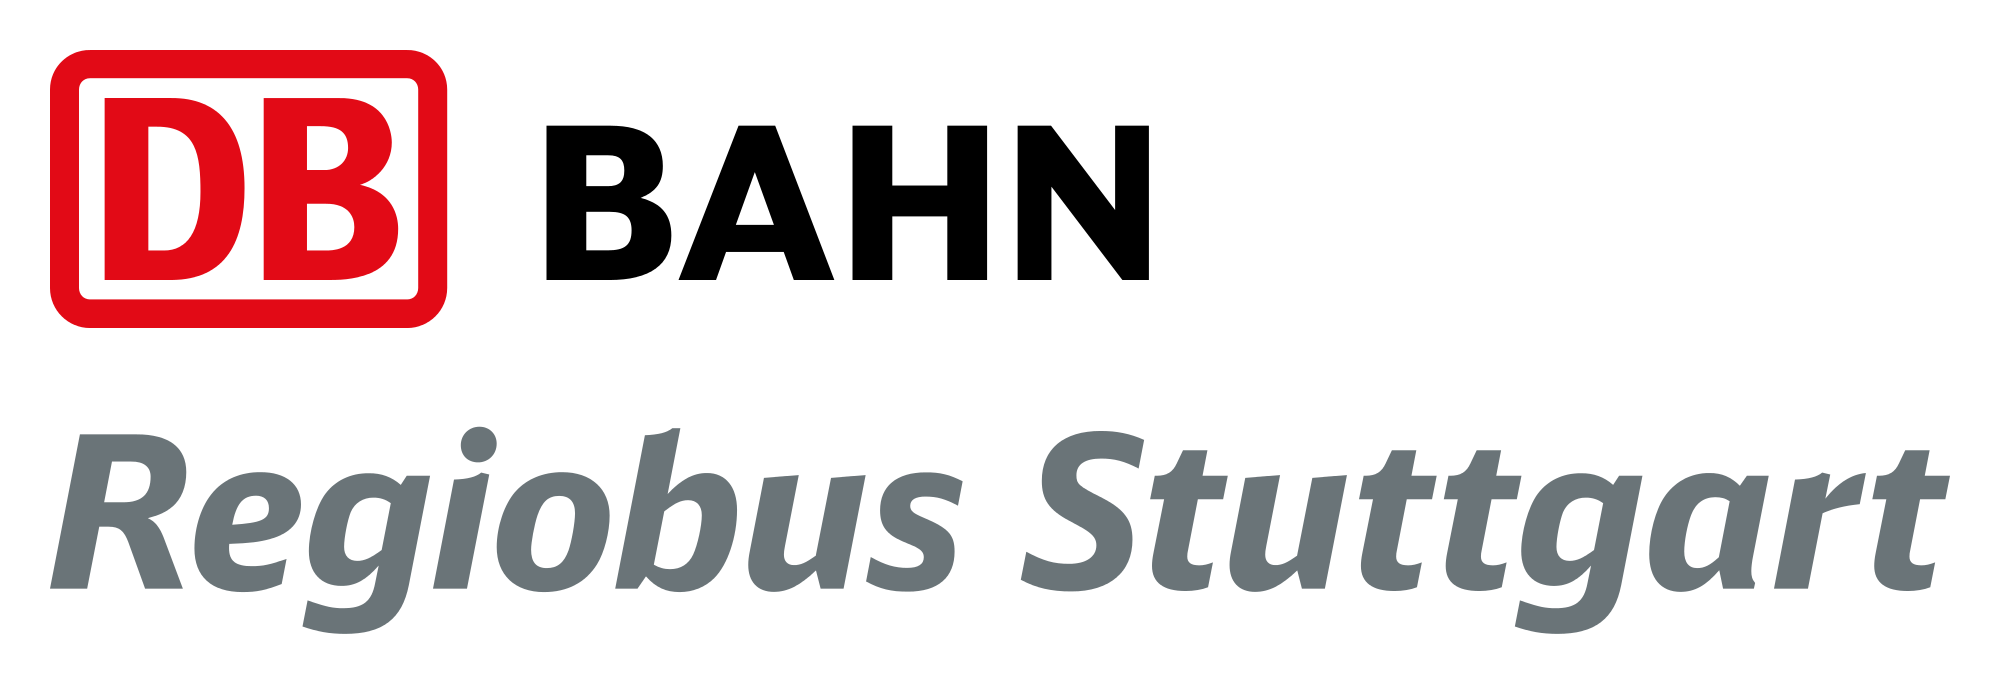 Regiobus Stuttgart